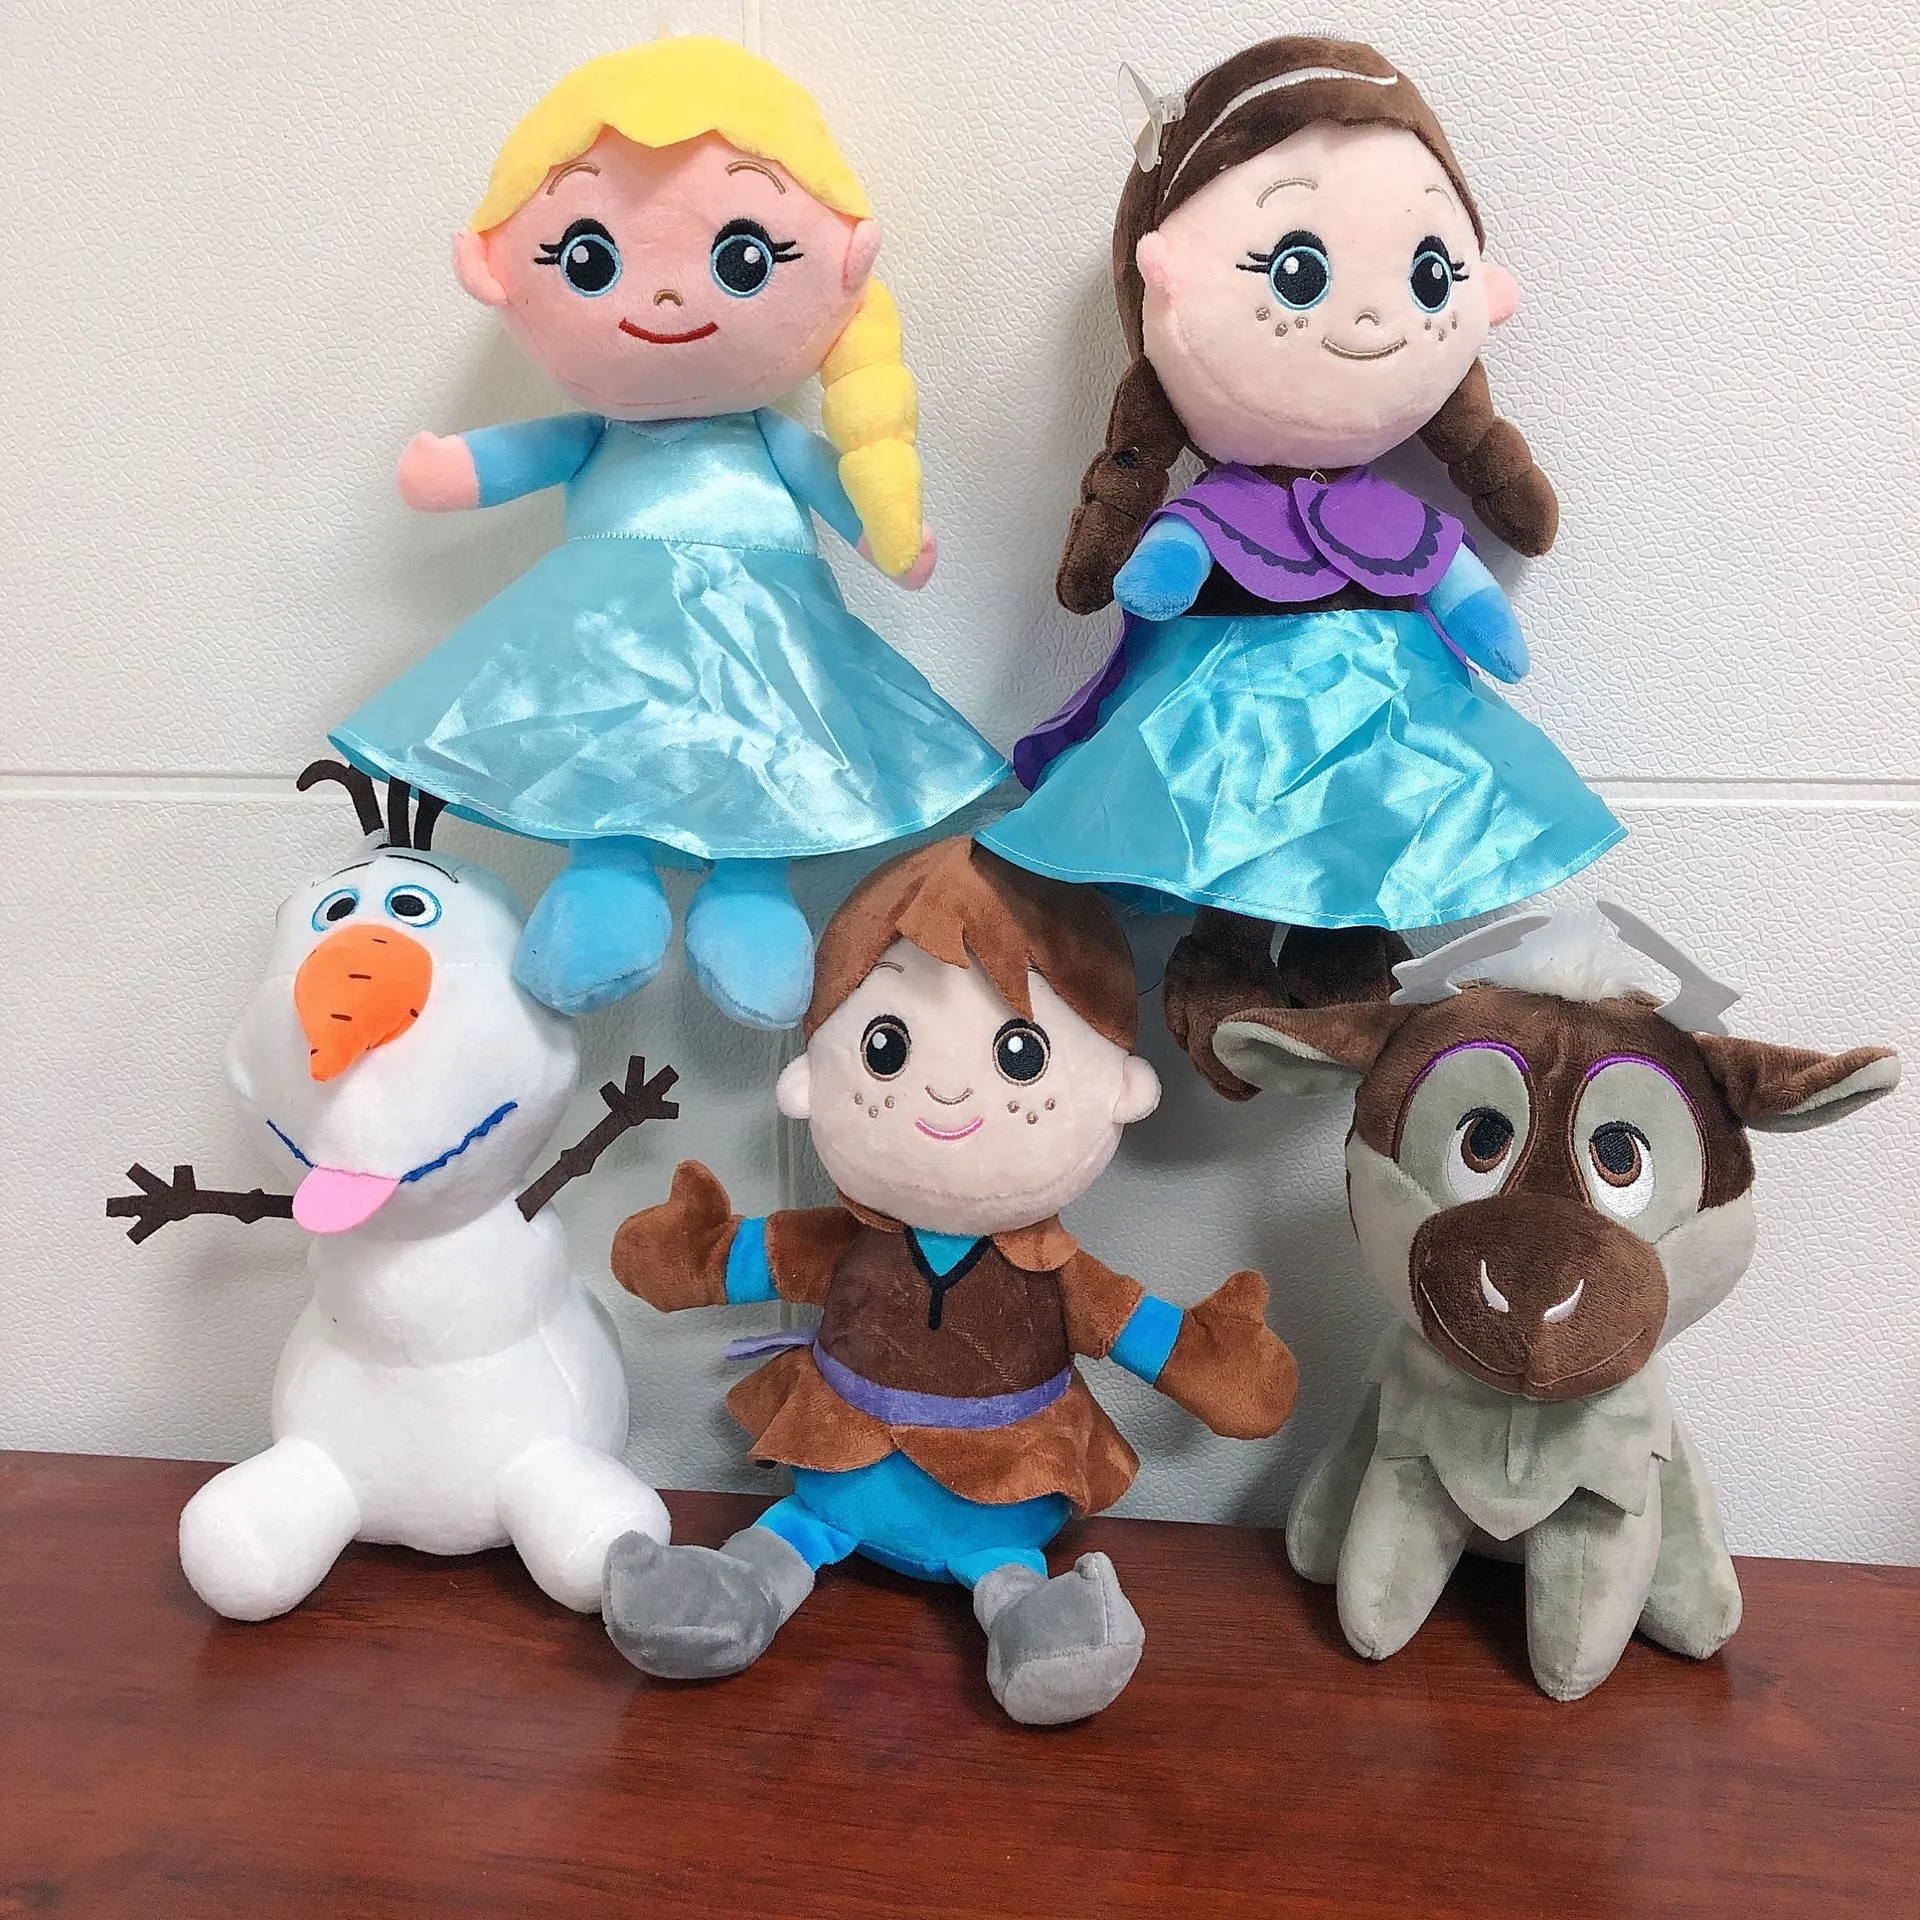 Reindeer Plush Toy Princess Anna Doll Snowman Doll Children's Birthday Christmas Gift